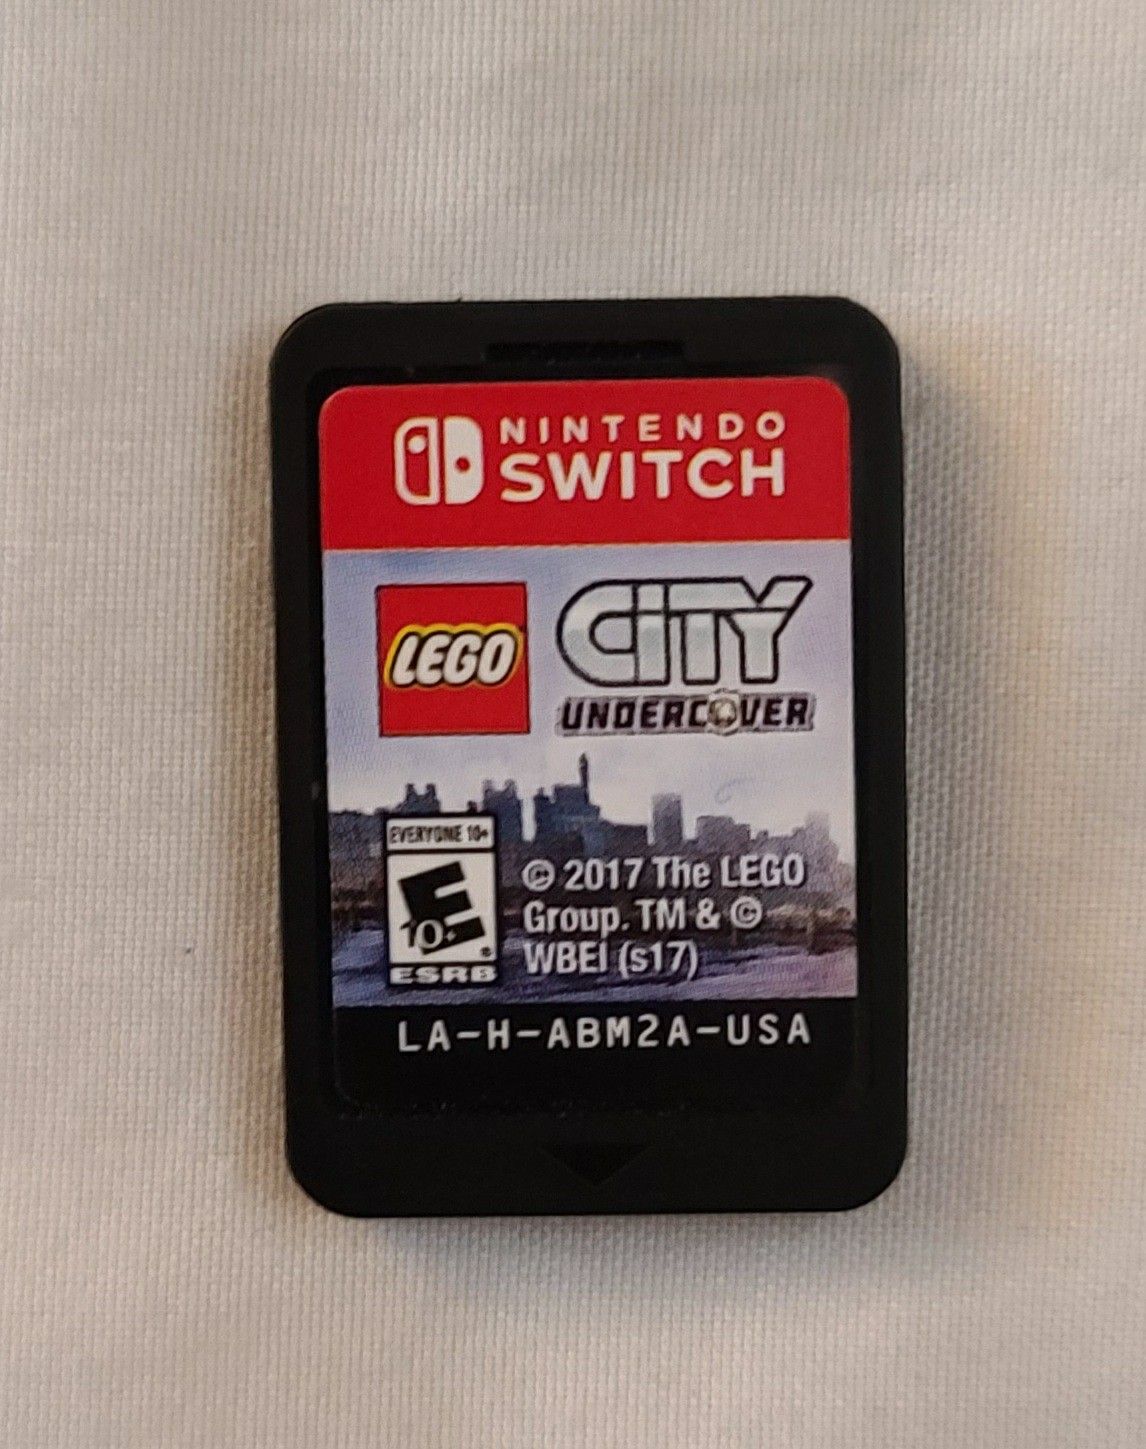 Nintendo switch Lego City Undercover